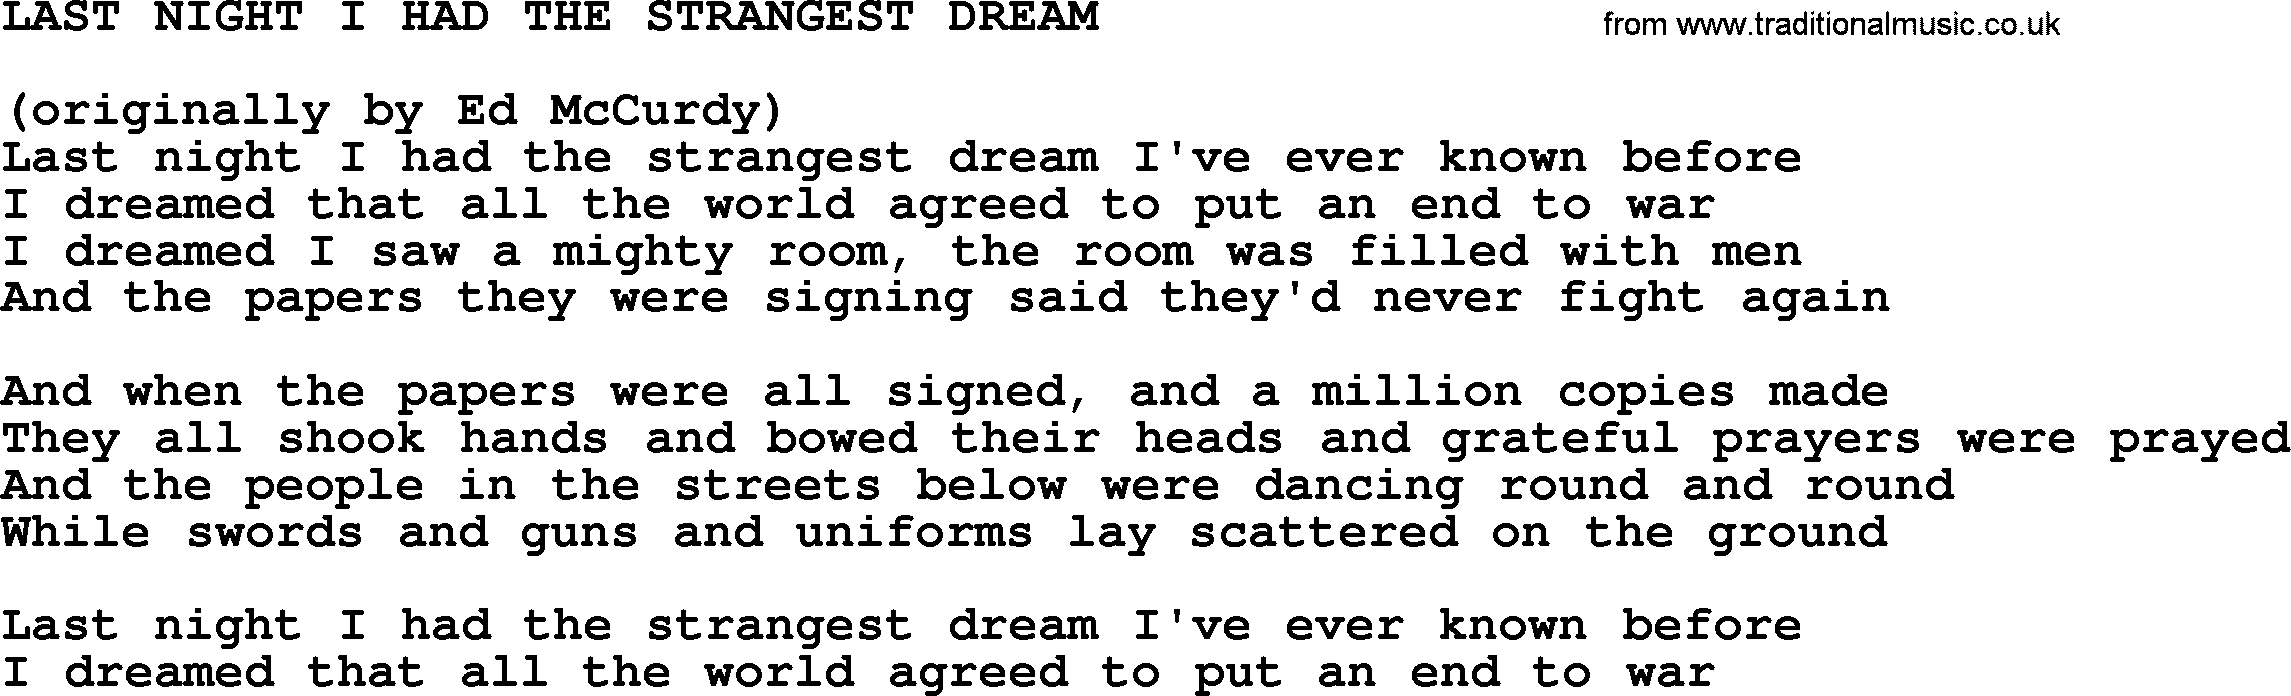 Johnny Cash song Last Night I Had The Strangest Dream.txt lyrics